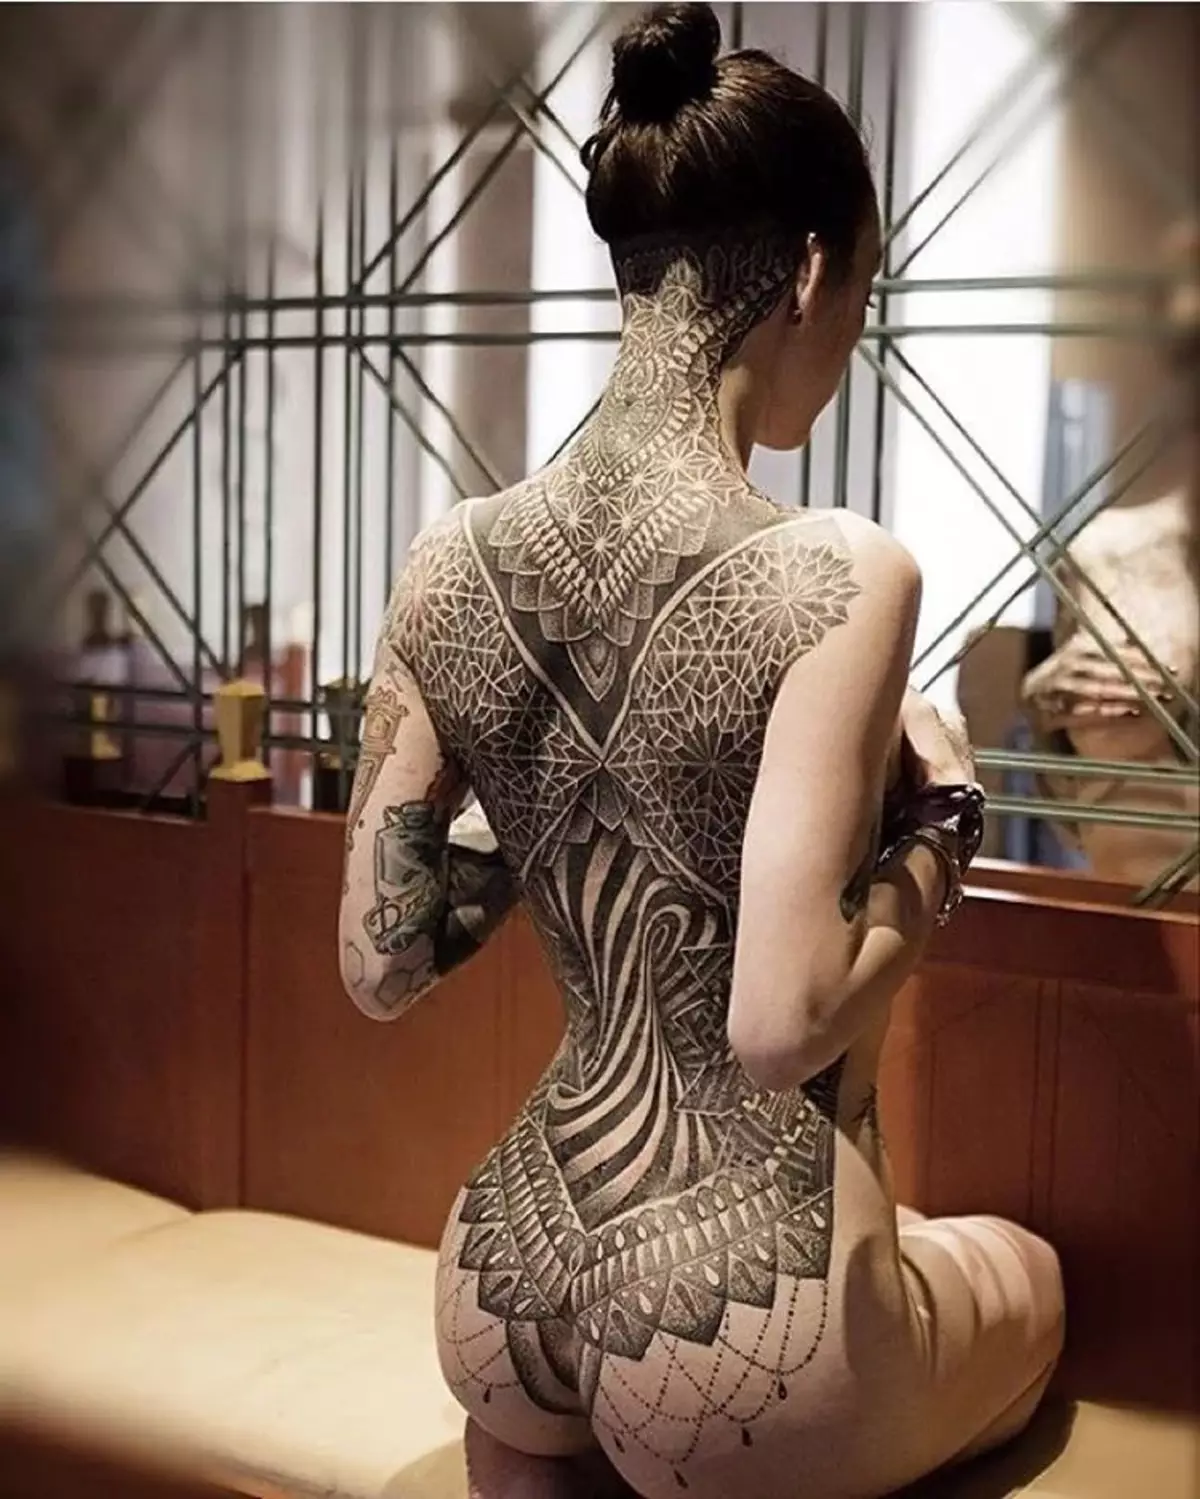 Велика тетоважа: Скице највећих тетоважа. Огромна црна тетоважа и остали цртежи 13727_18